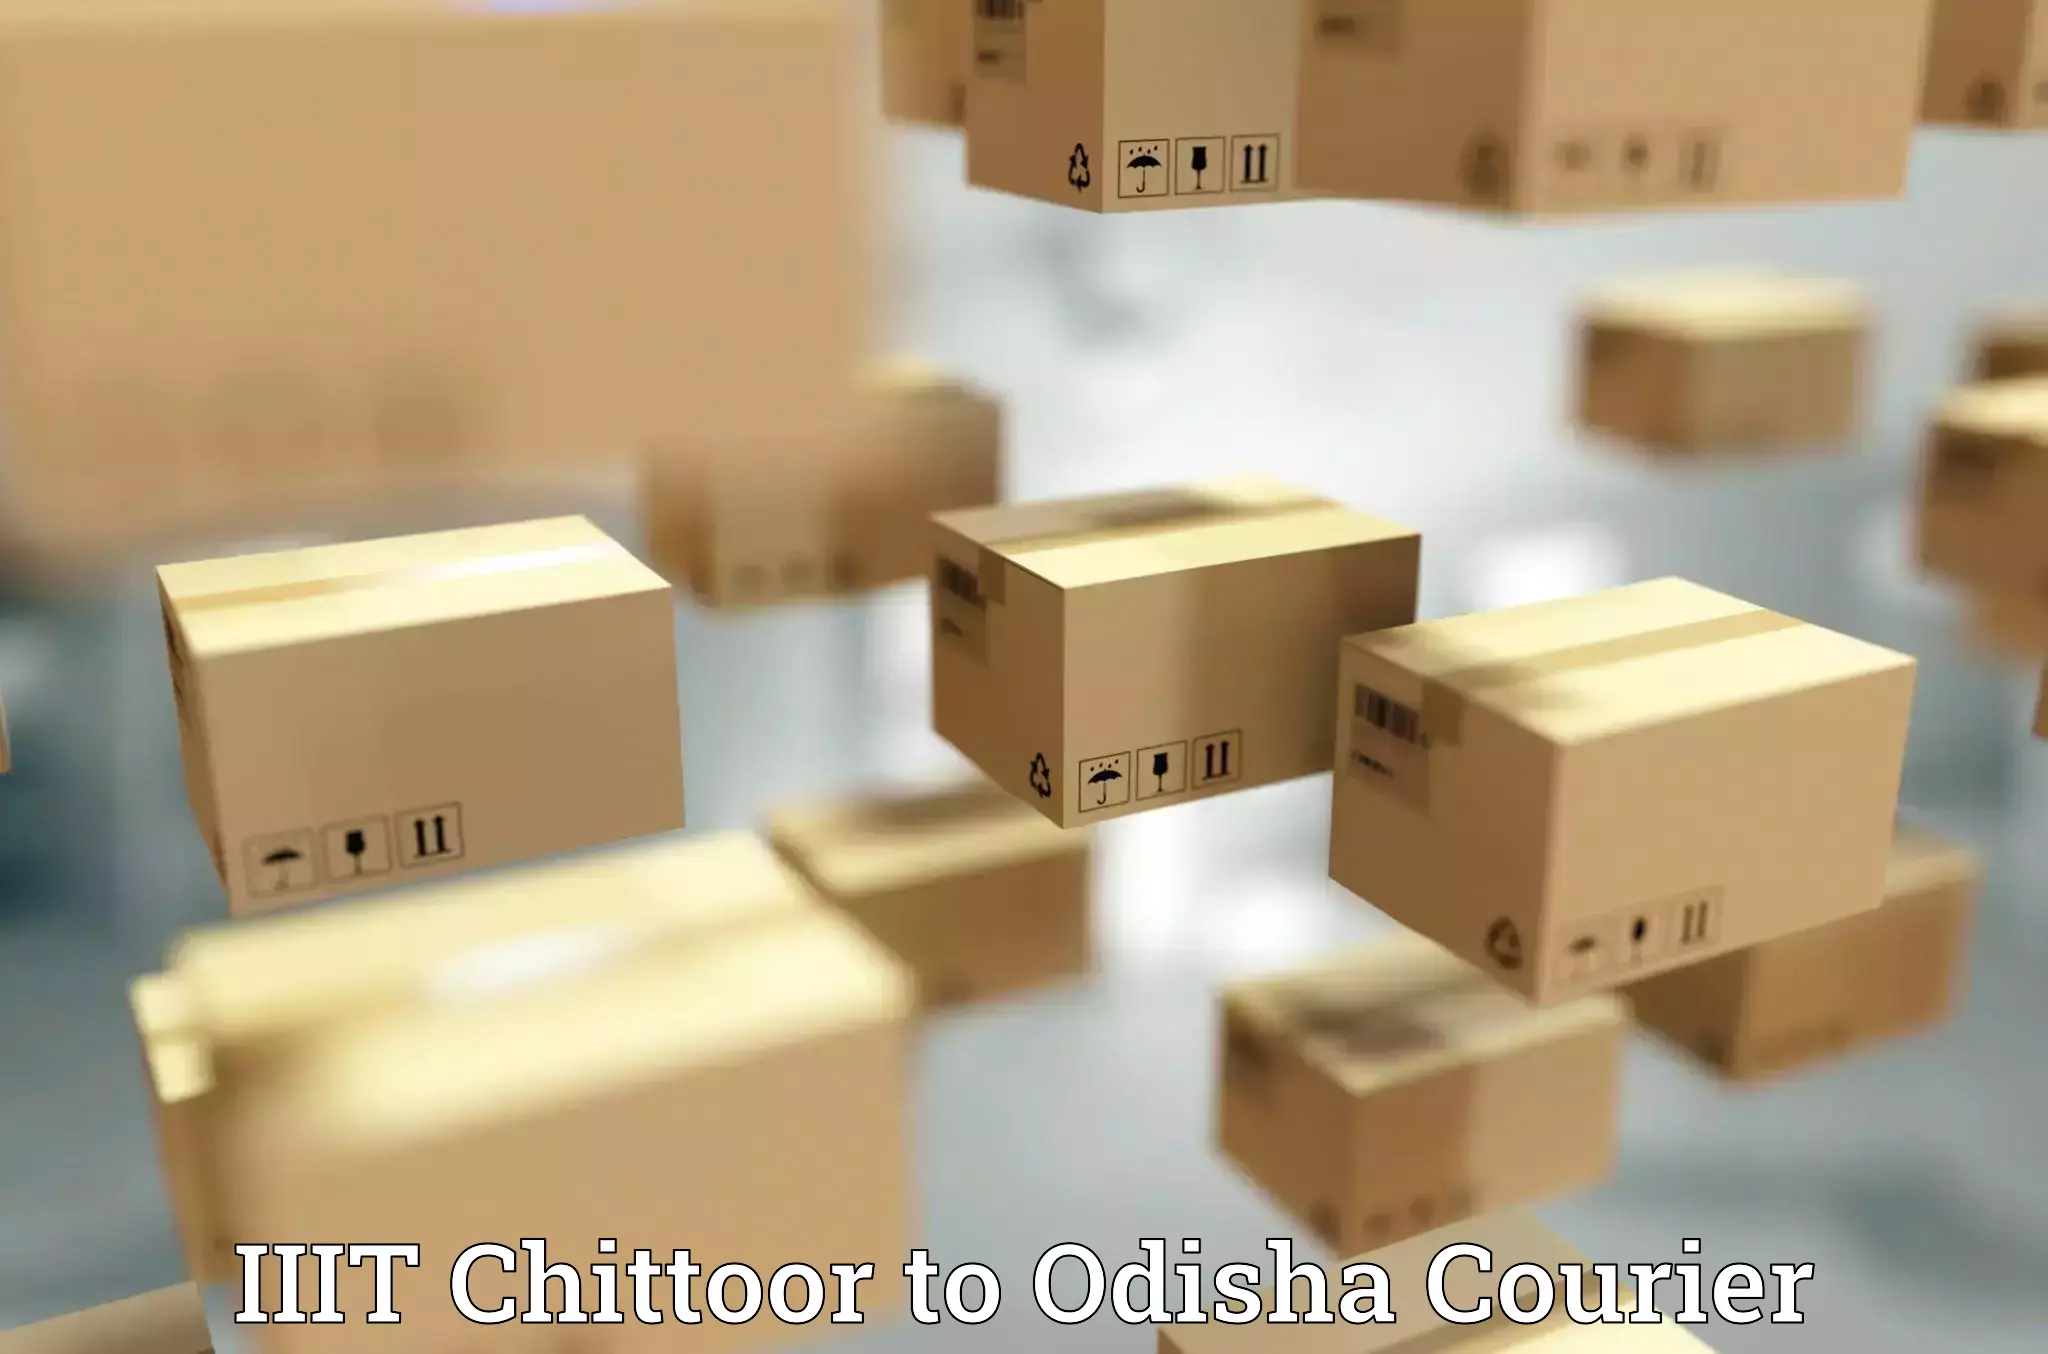 Professional courier handling IIIT Chittoor to Odisha